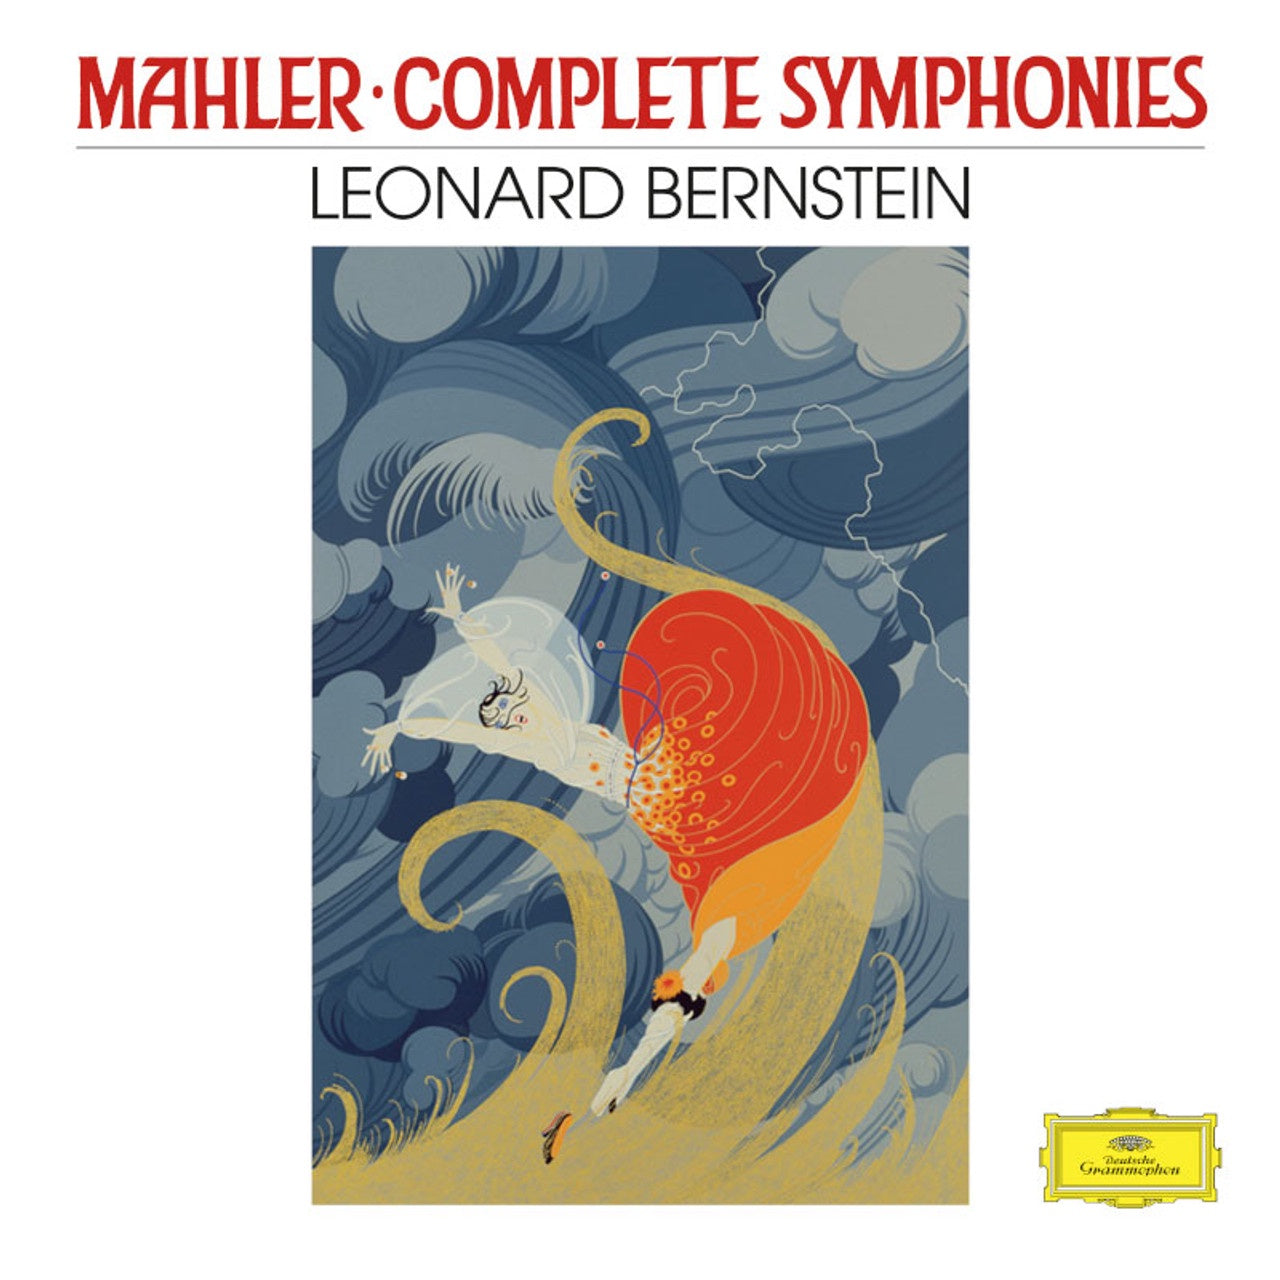 Leonard Bernstein - Mahler Complete Symphonies - New 16 LP Box Set 2022 Deutsche Grammophon Europe Vinyl - Classical